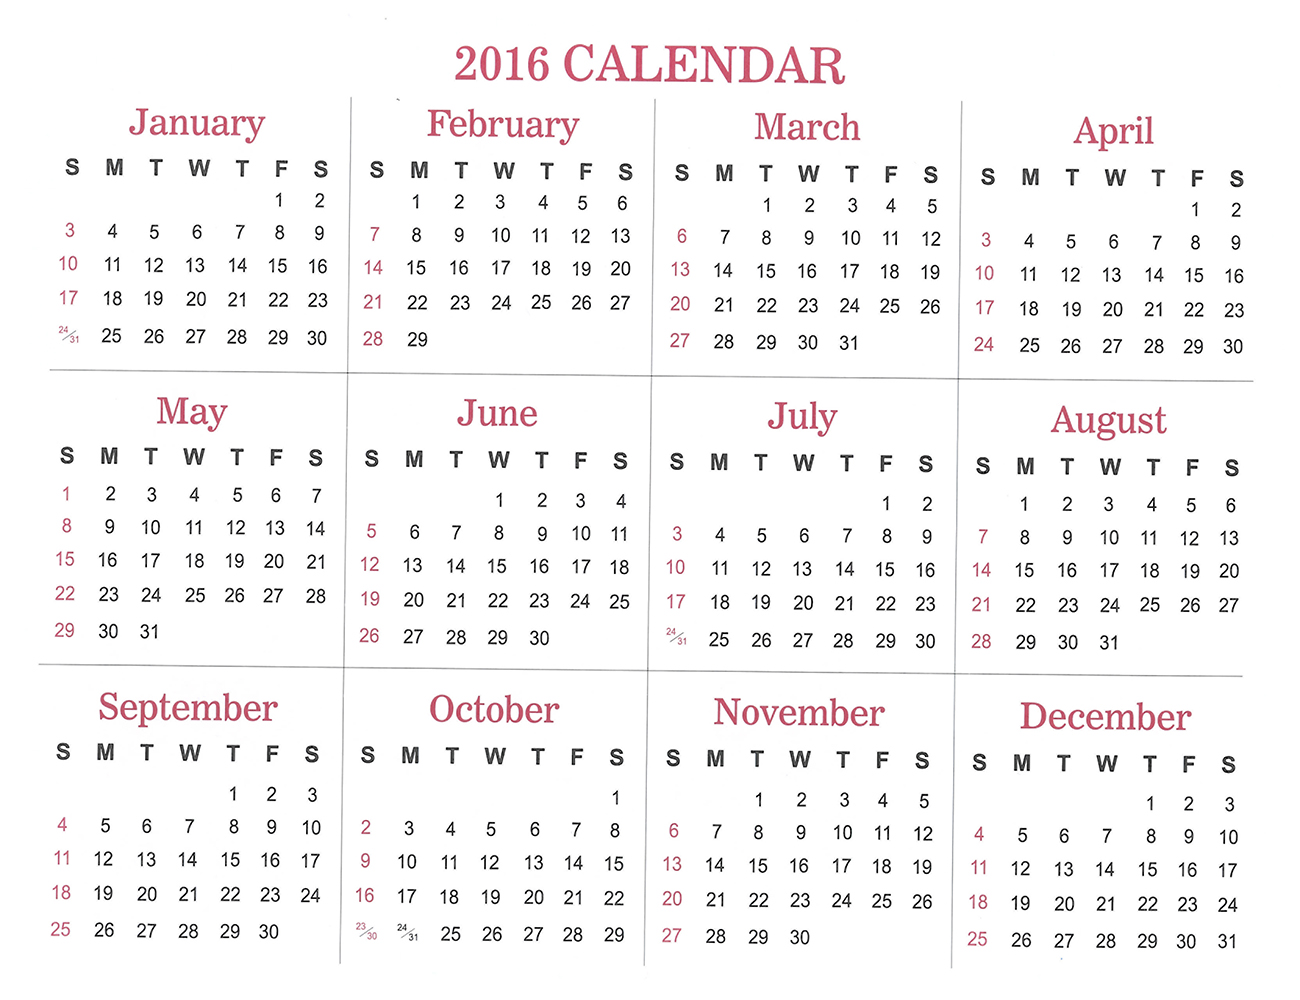 Back Cover: 2015 The Peoples Gospel Hour Calendar